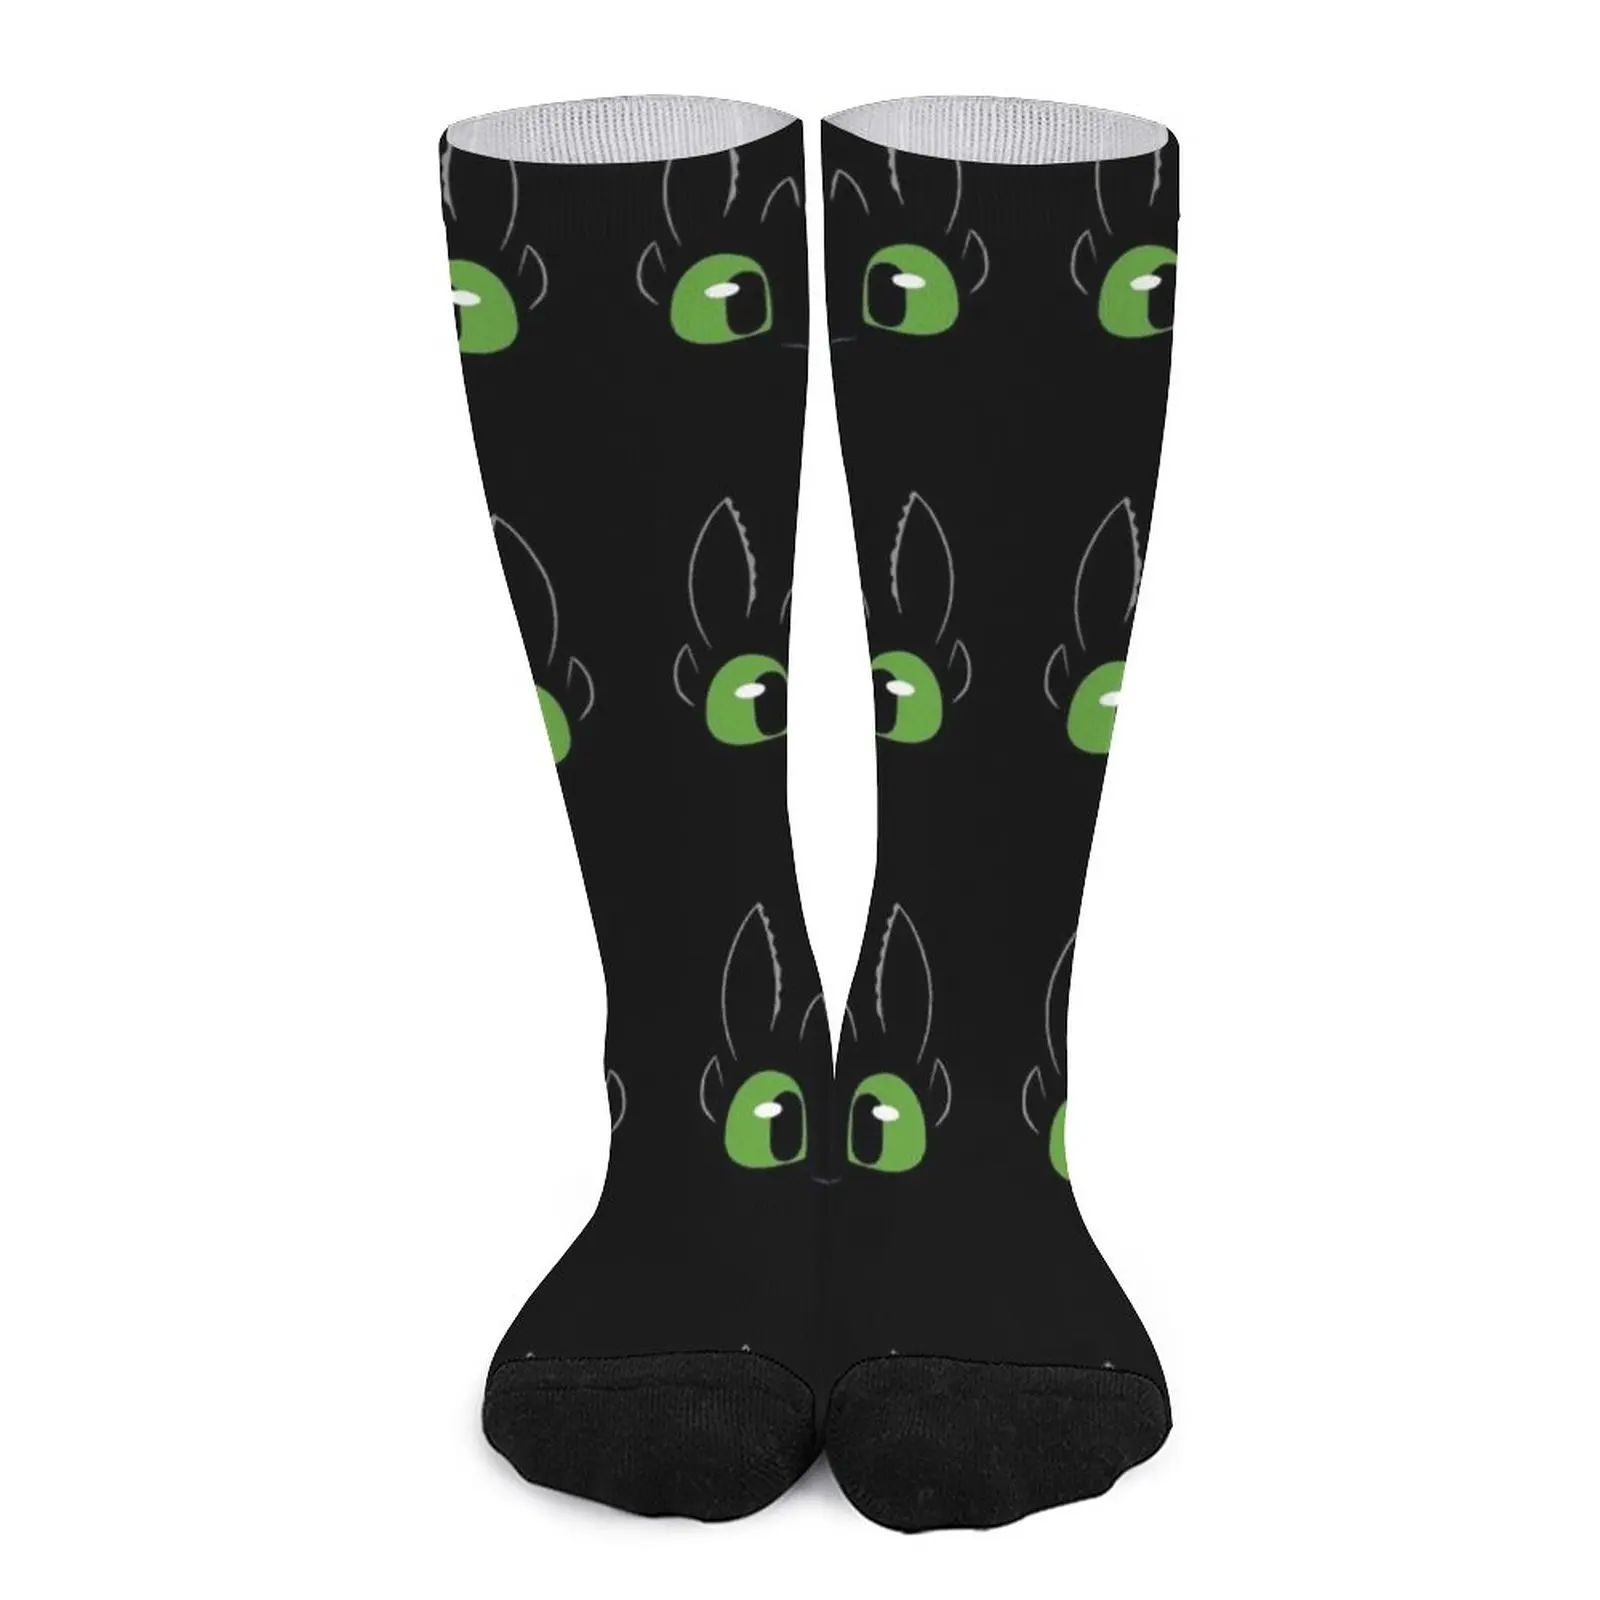 Dragon minimalist Socks Ankle socks woman Men gift Mens socks Male sock